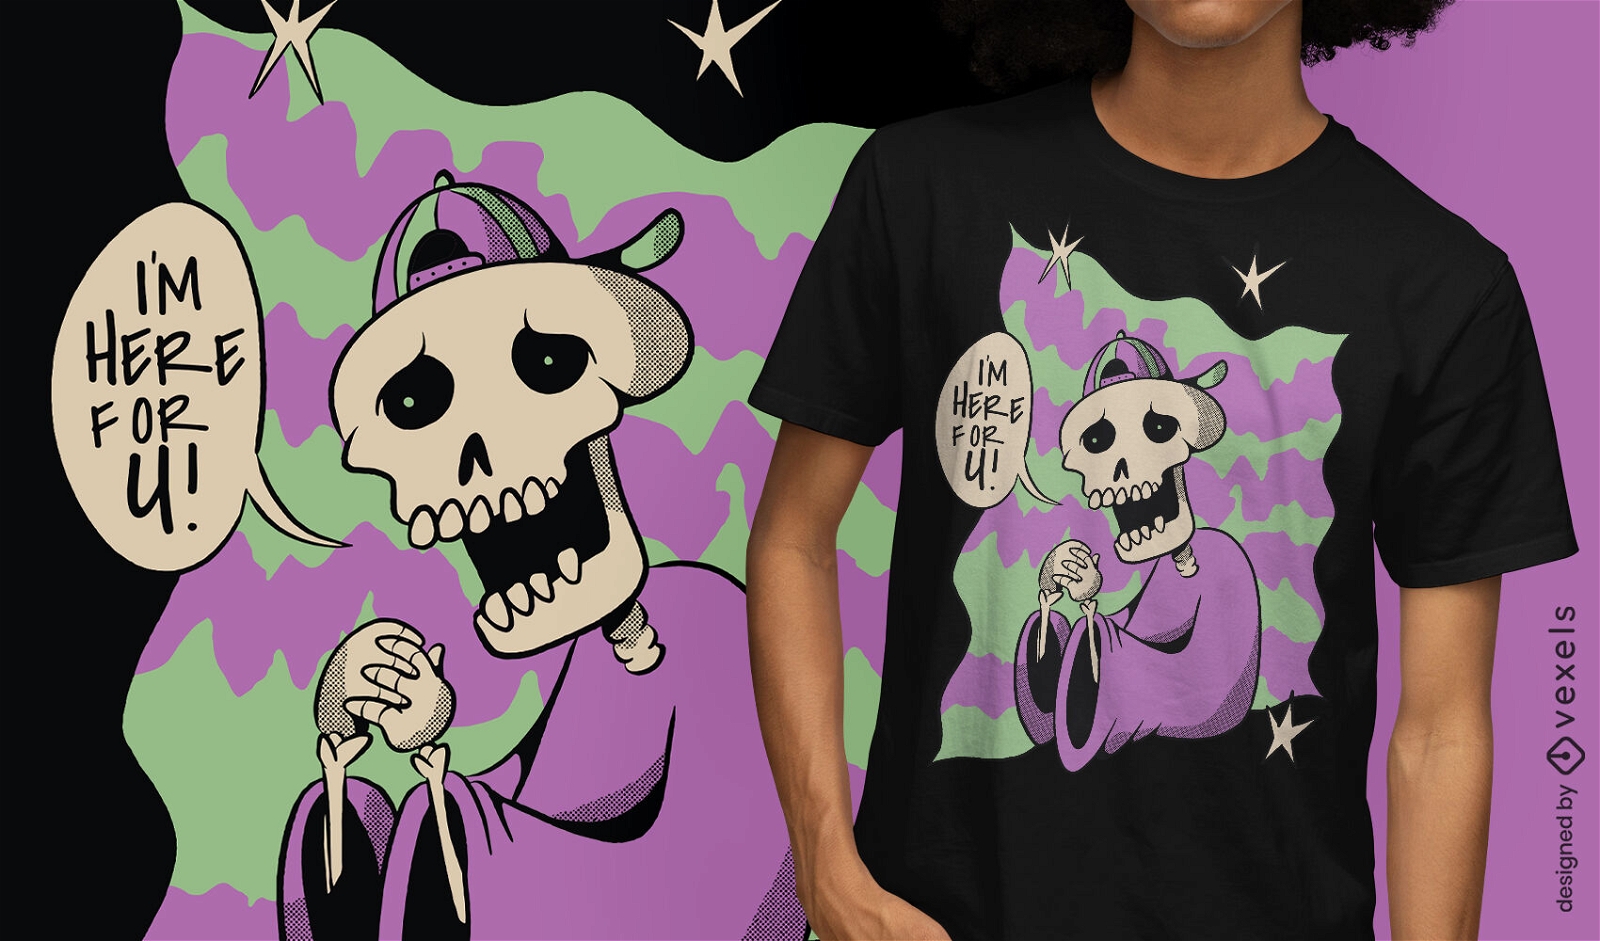 Supportive skeleton t-shirt design